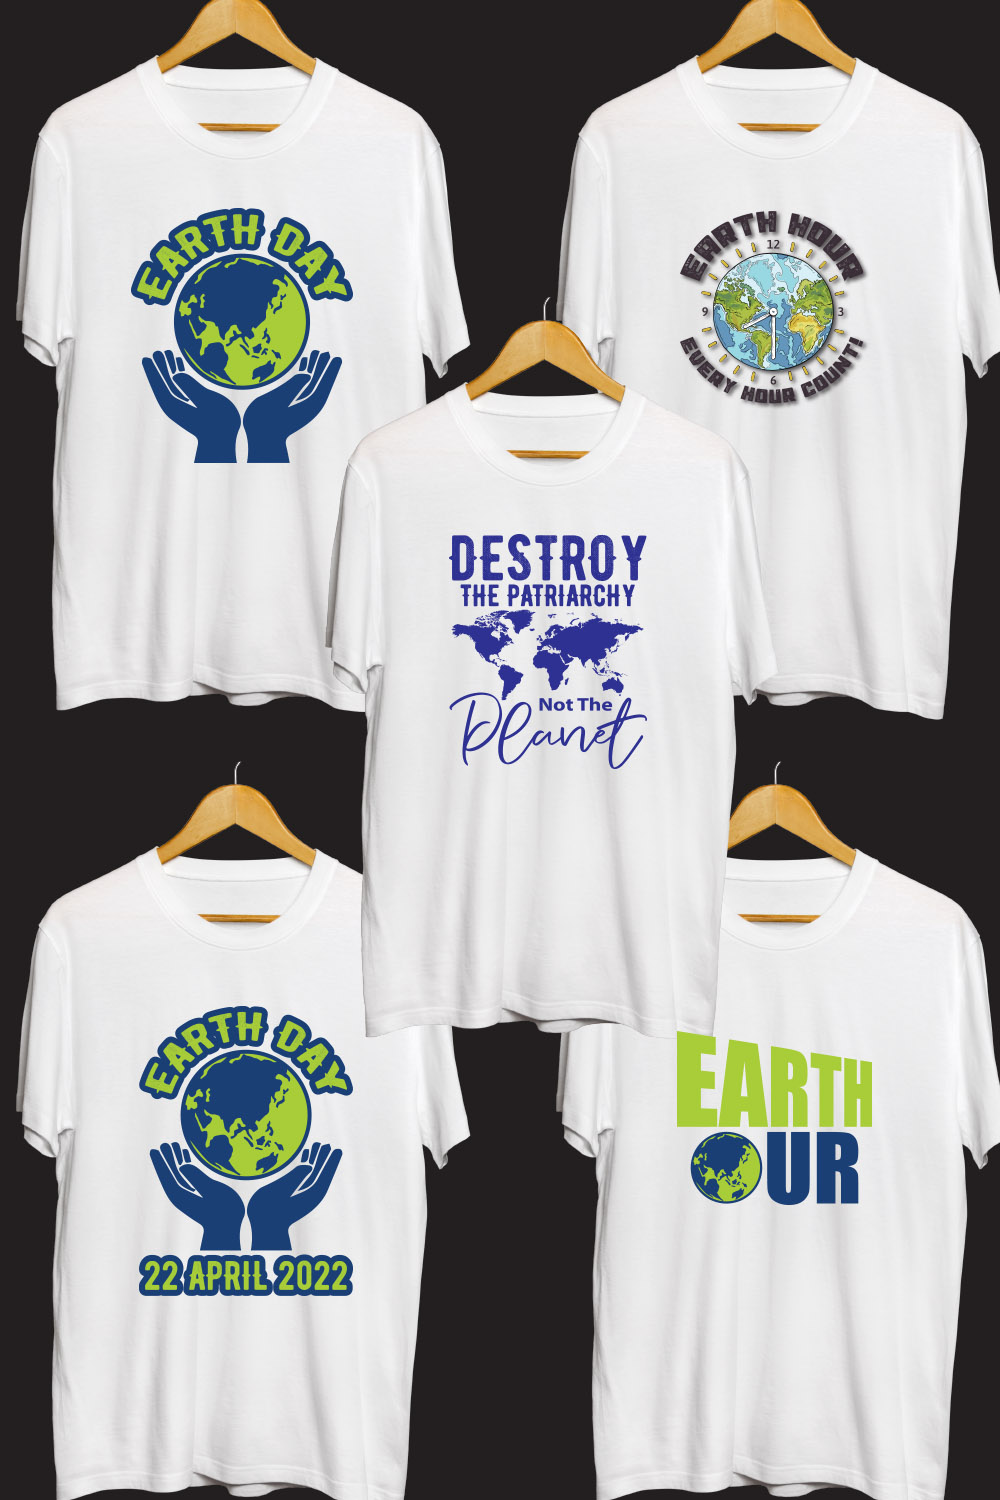 Earth Day SVG T Shirt Designs Bundle pinterest preview image.